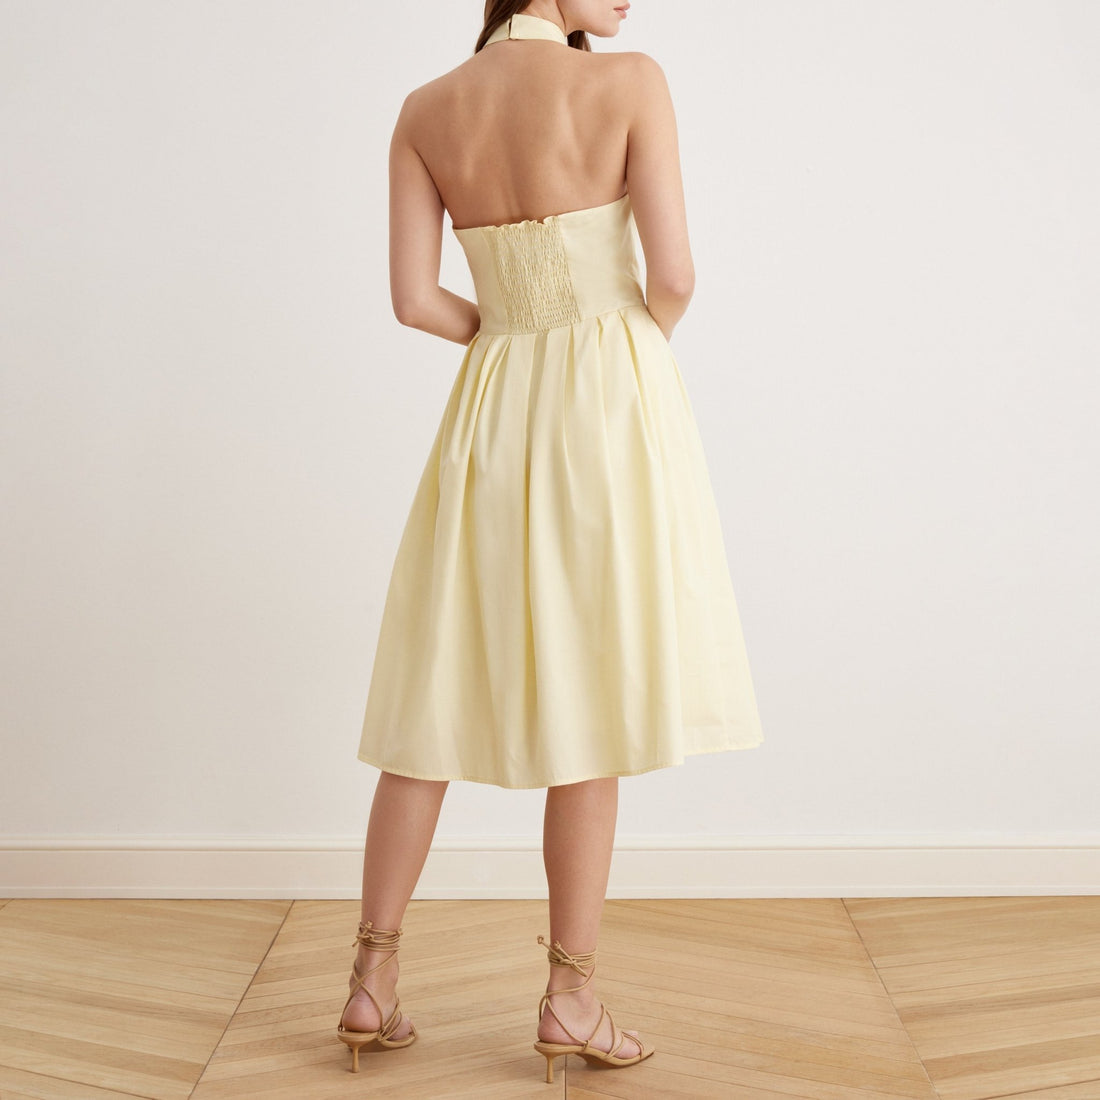 Knee-length Sleeveless Dress with a Short Turtleneck - shopaleena